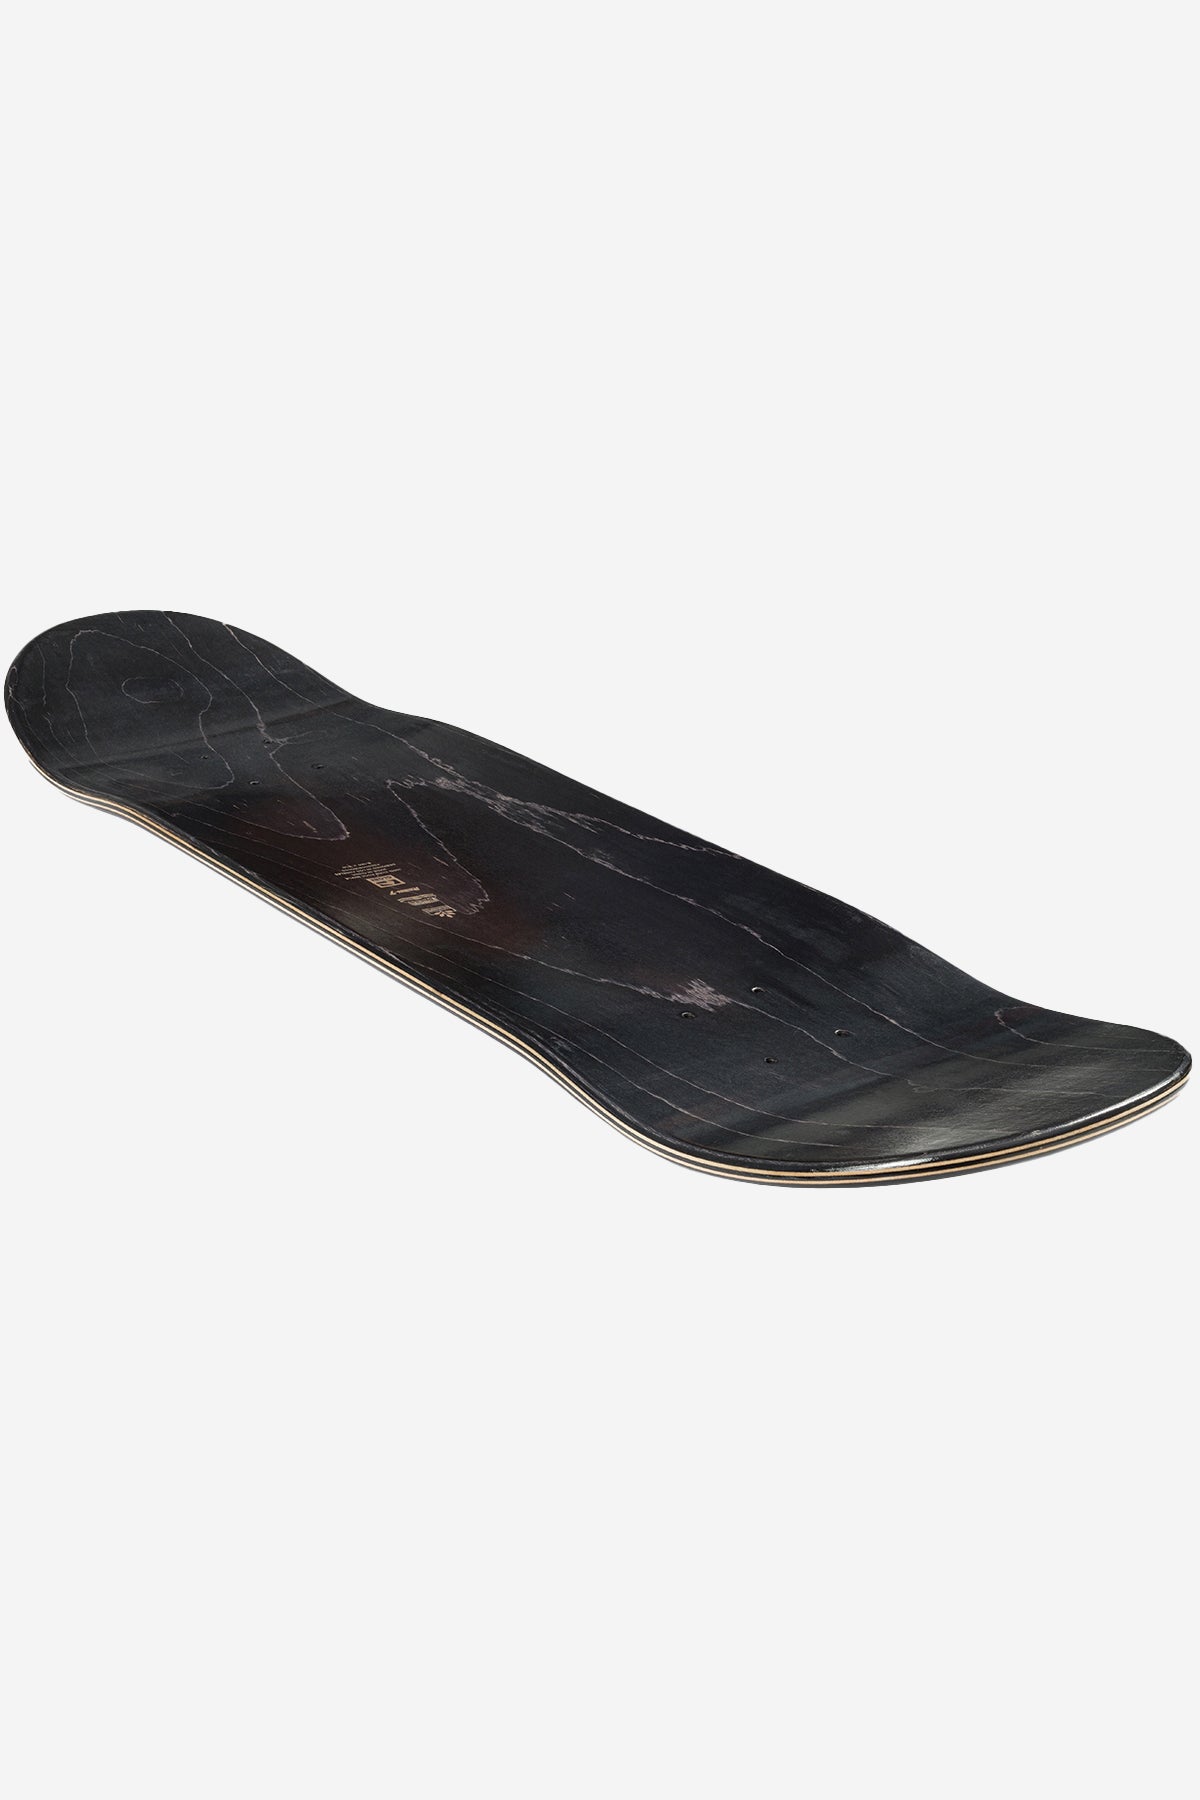 Globe - G1 Argo - Schwarz Camo - 8.125" Skateboard Deck